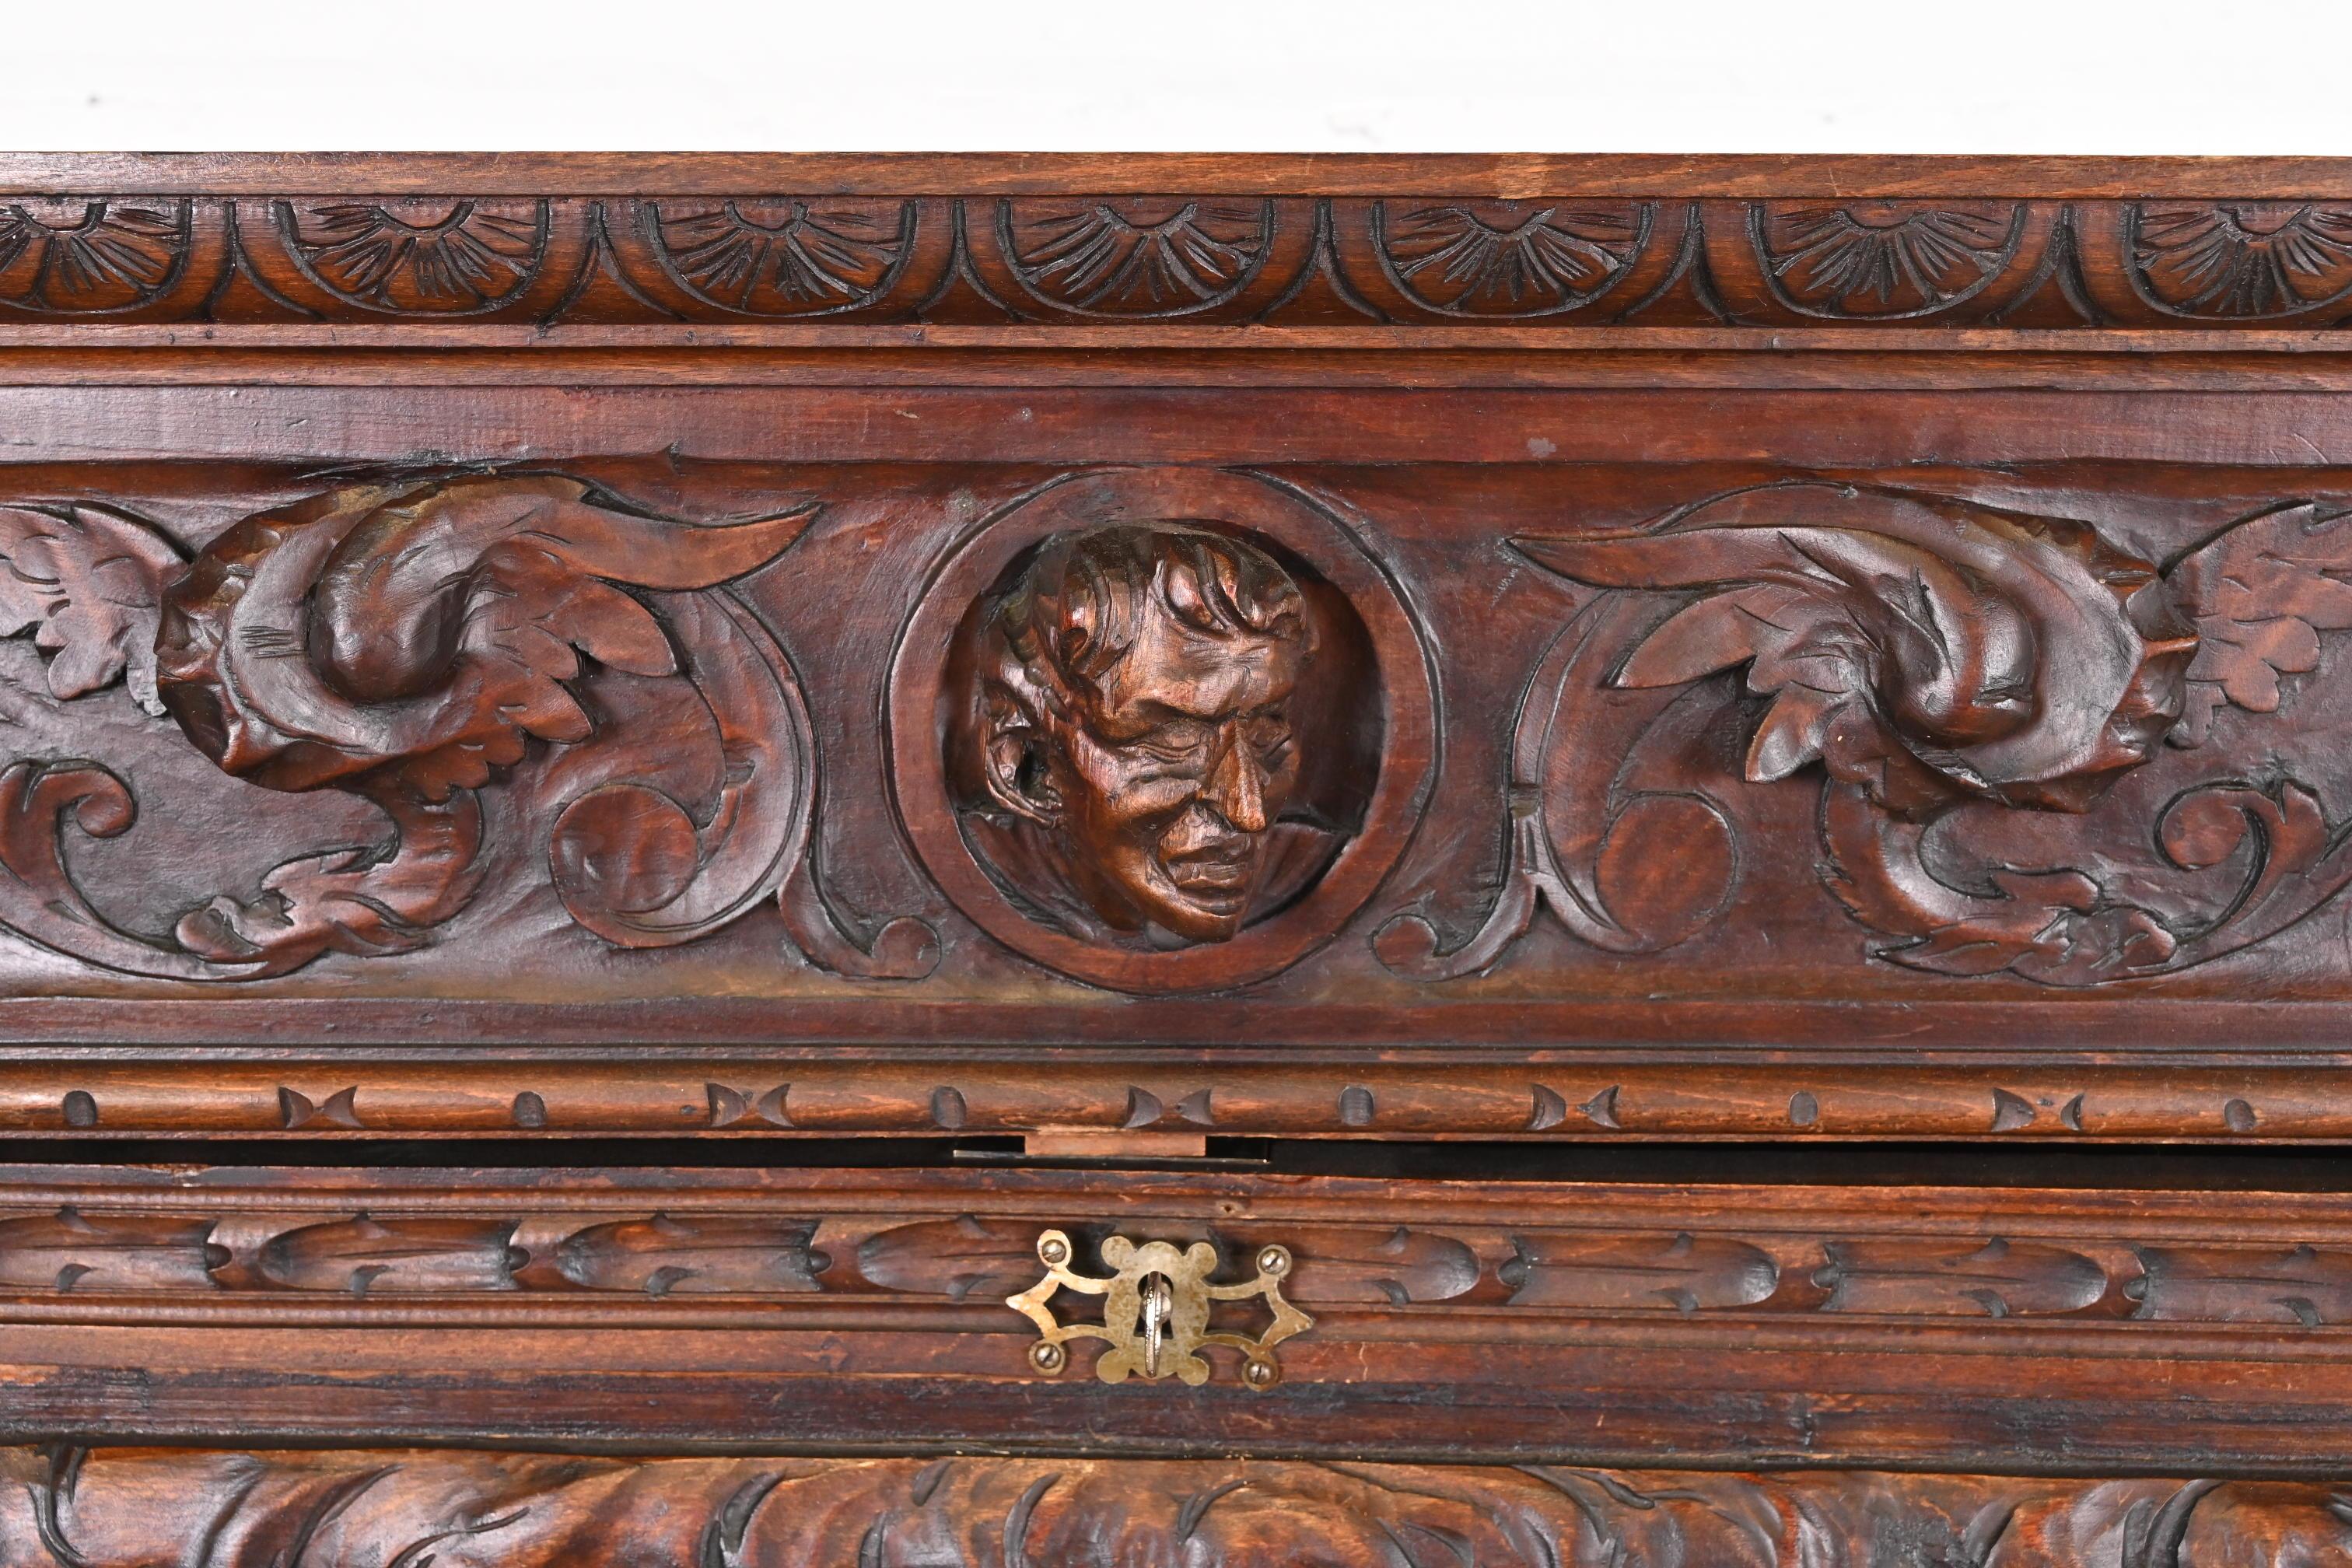 Iron Spanish Baroque Renaissance Carved Walnut Bargueño Desk or Bar Cabinet